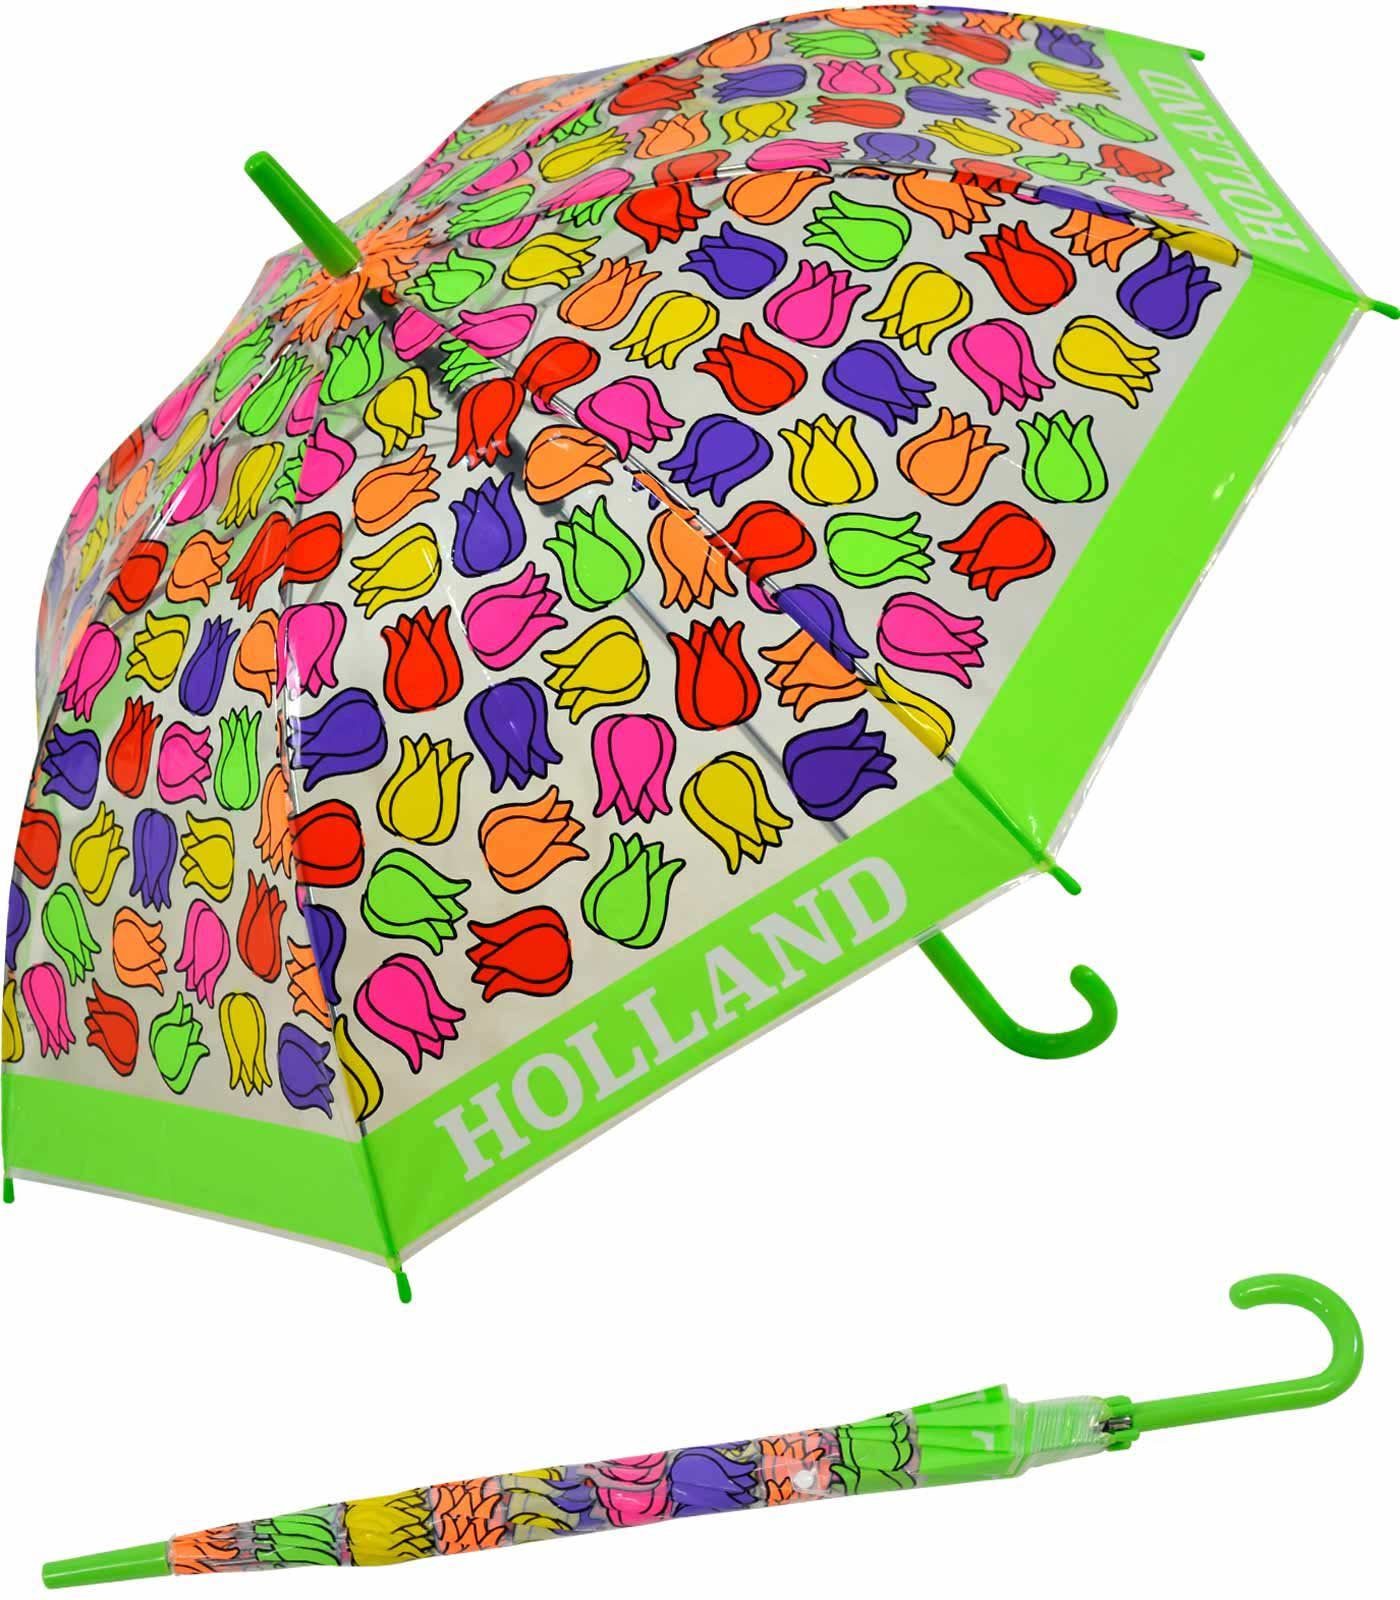 Spezial Impliva Langregenschirm Falconetti Kinderschirm grün bunt - durchsichtig transparent Tulpen